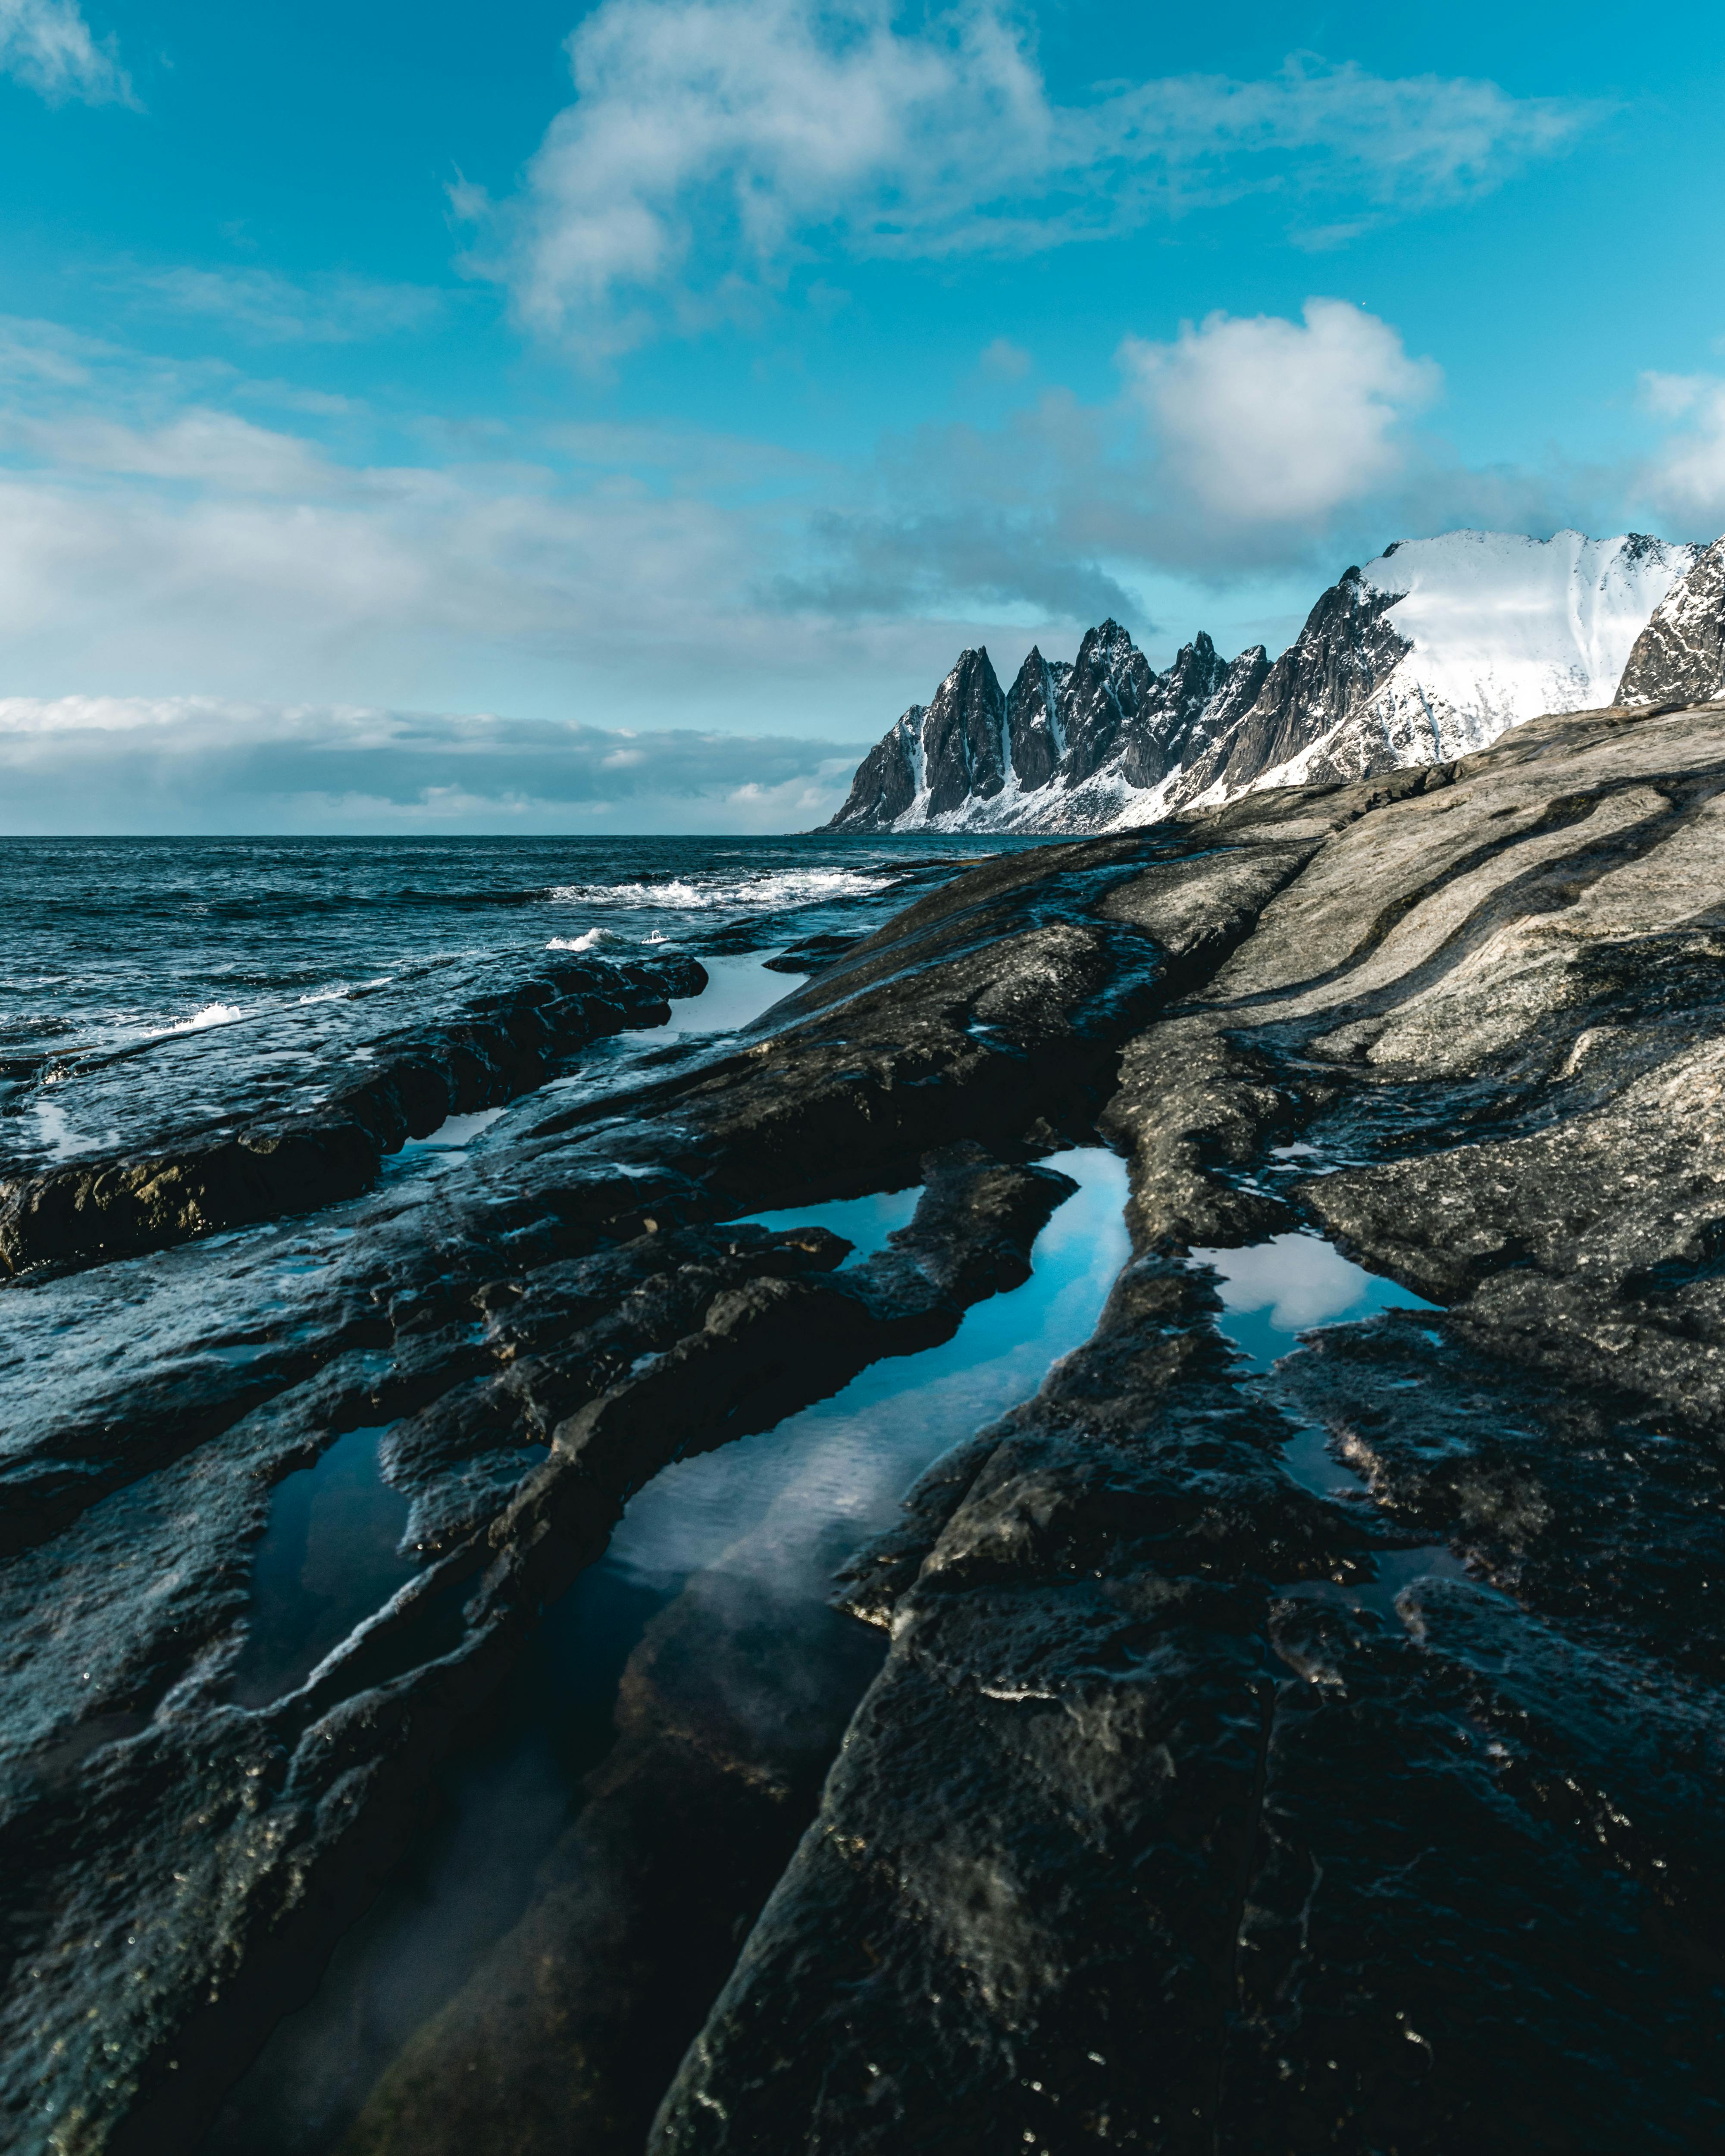 Icy Mountain Sea Waves Scenery · Free Stock Photo